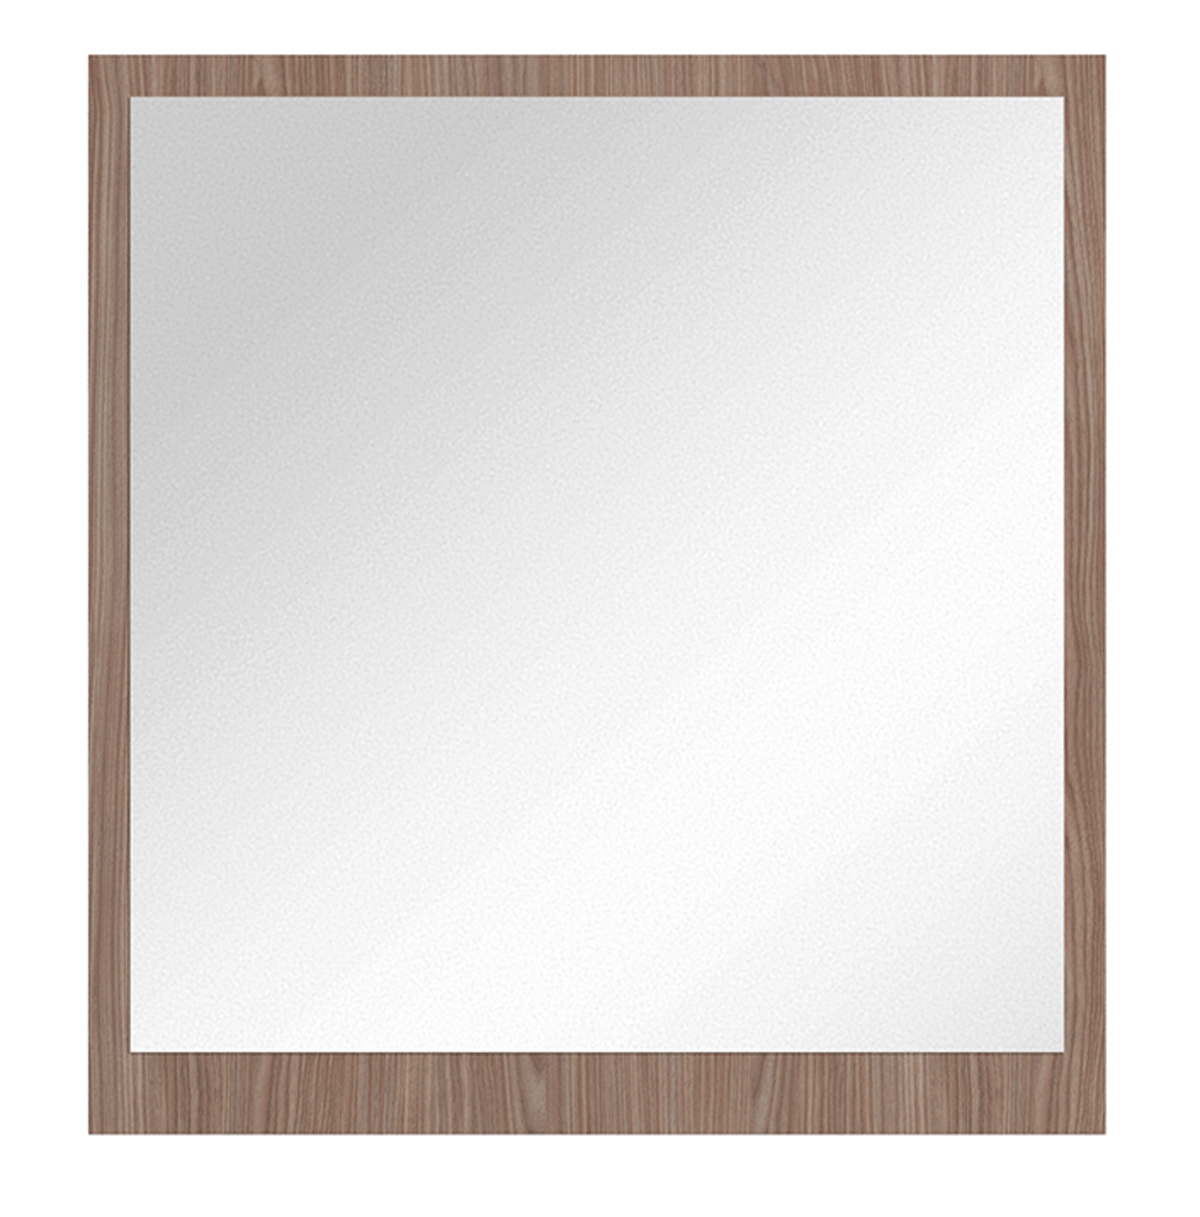 Bedroom Furniture Mattresses, Wooden Frames Nora mirror